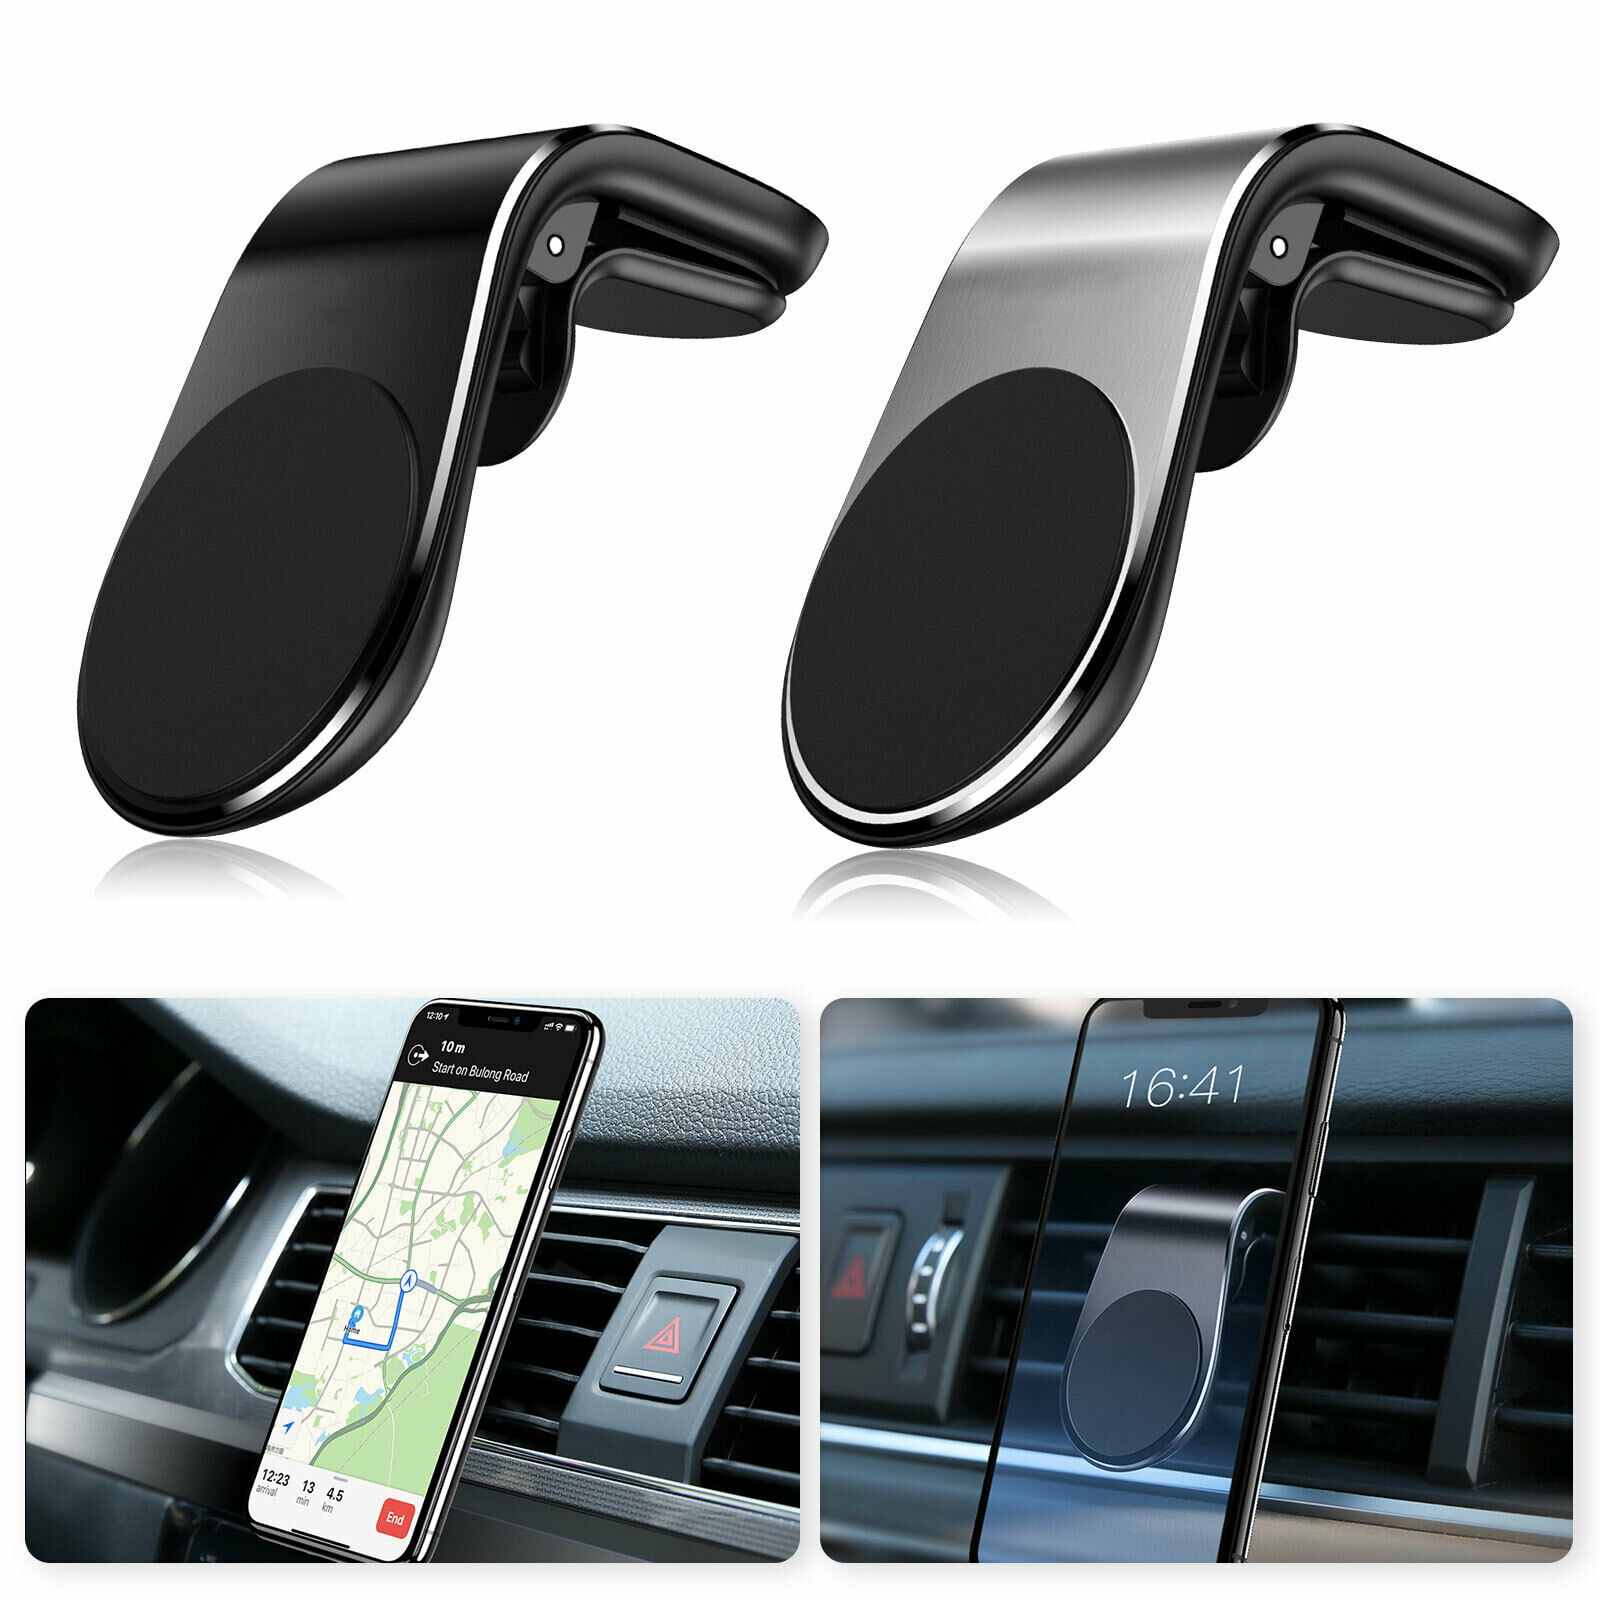 Blue Single Star car Mount Phone Holder for iPhone 7 iPhone x Huawei Cell Phone Holder for car Vent Cell Phone Holder for Car Air Even 